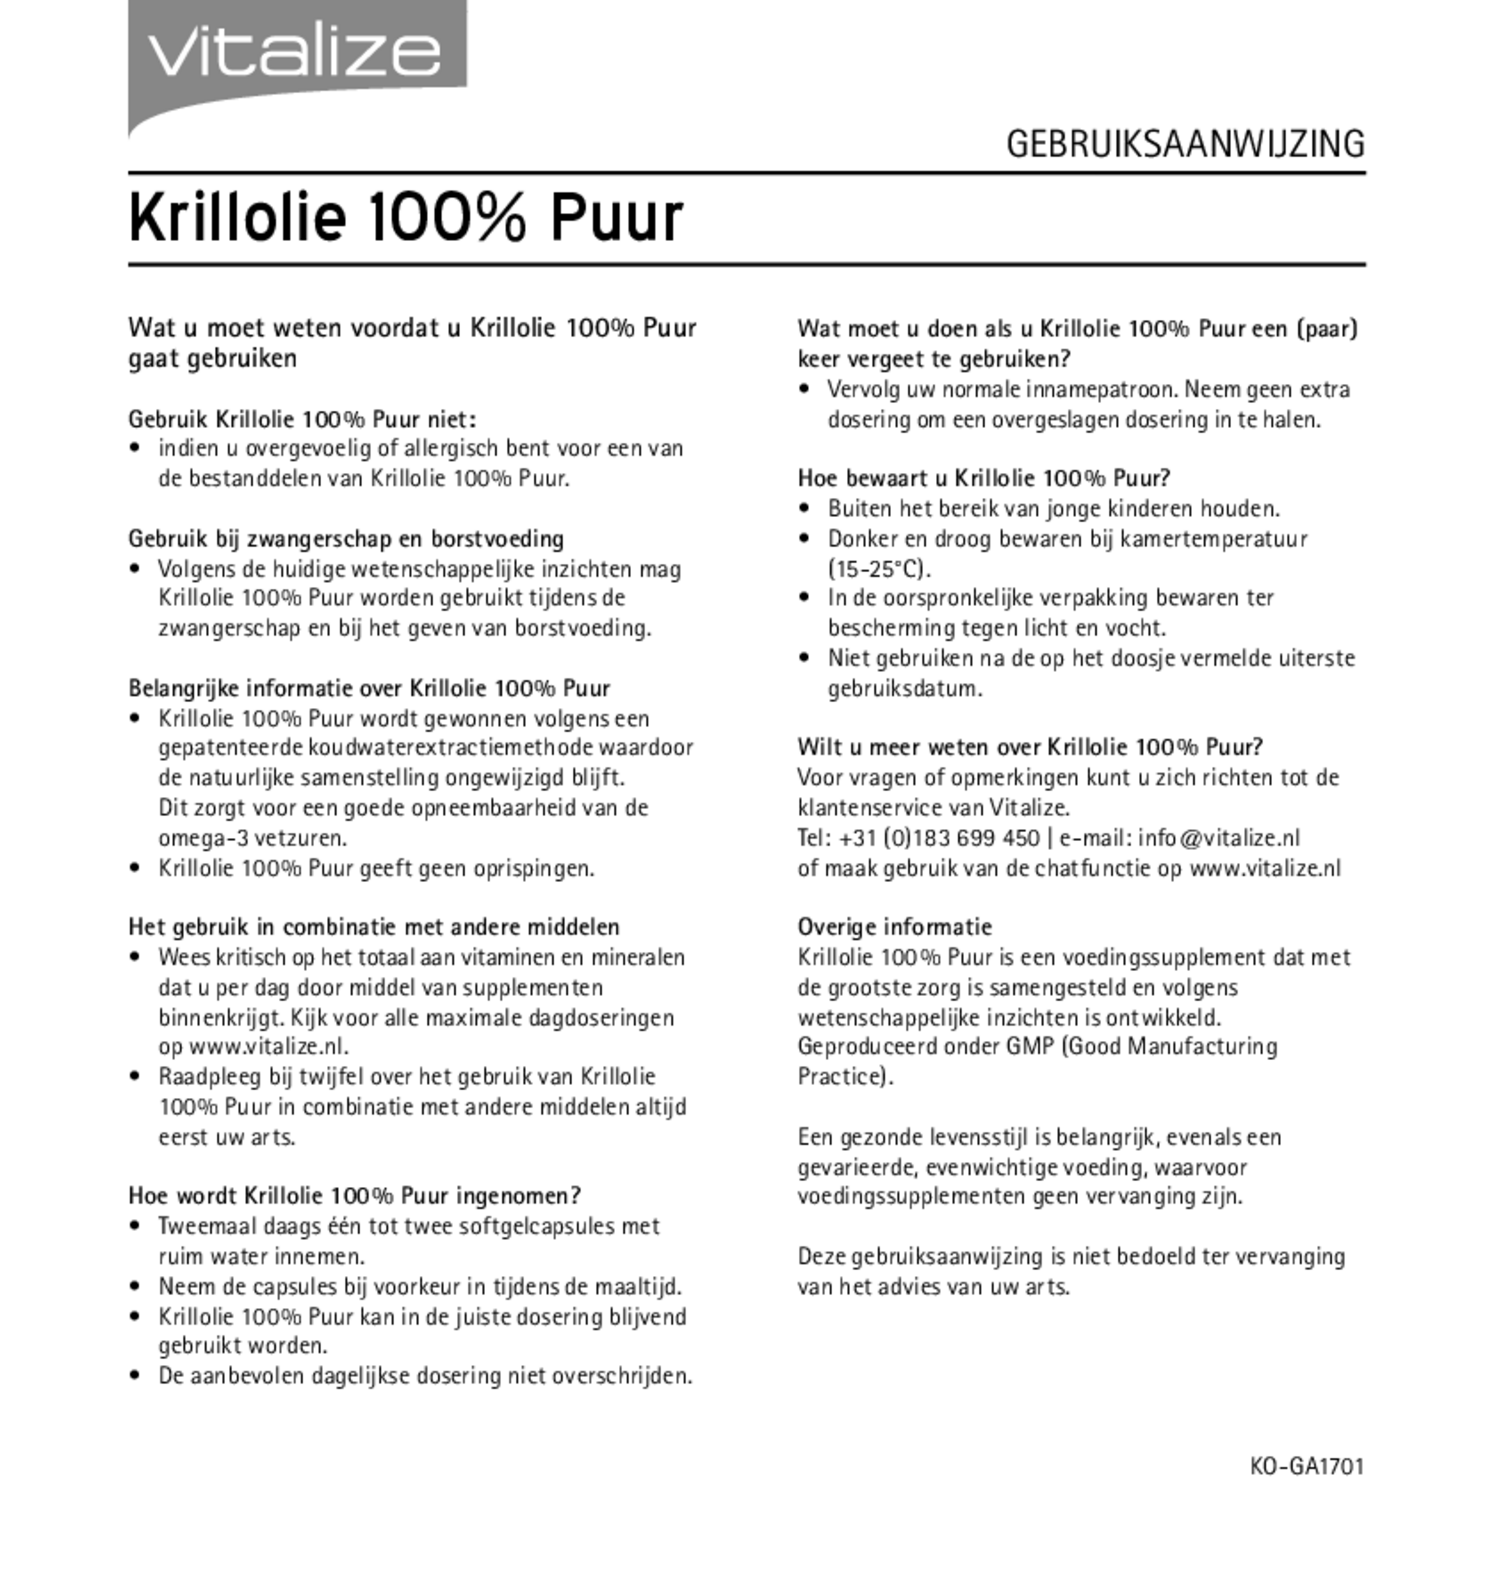 Krillolie 100% Puur Capsules afbeelding van document #2, gebruiksaanwijzing